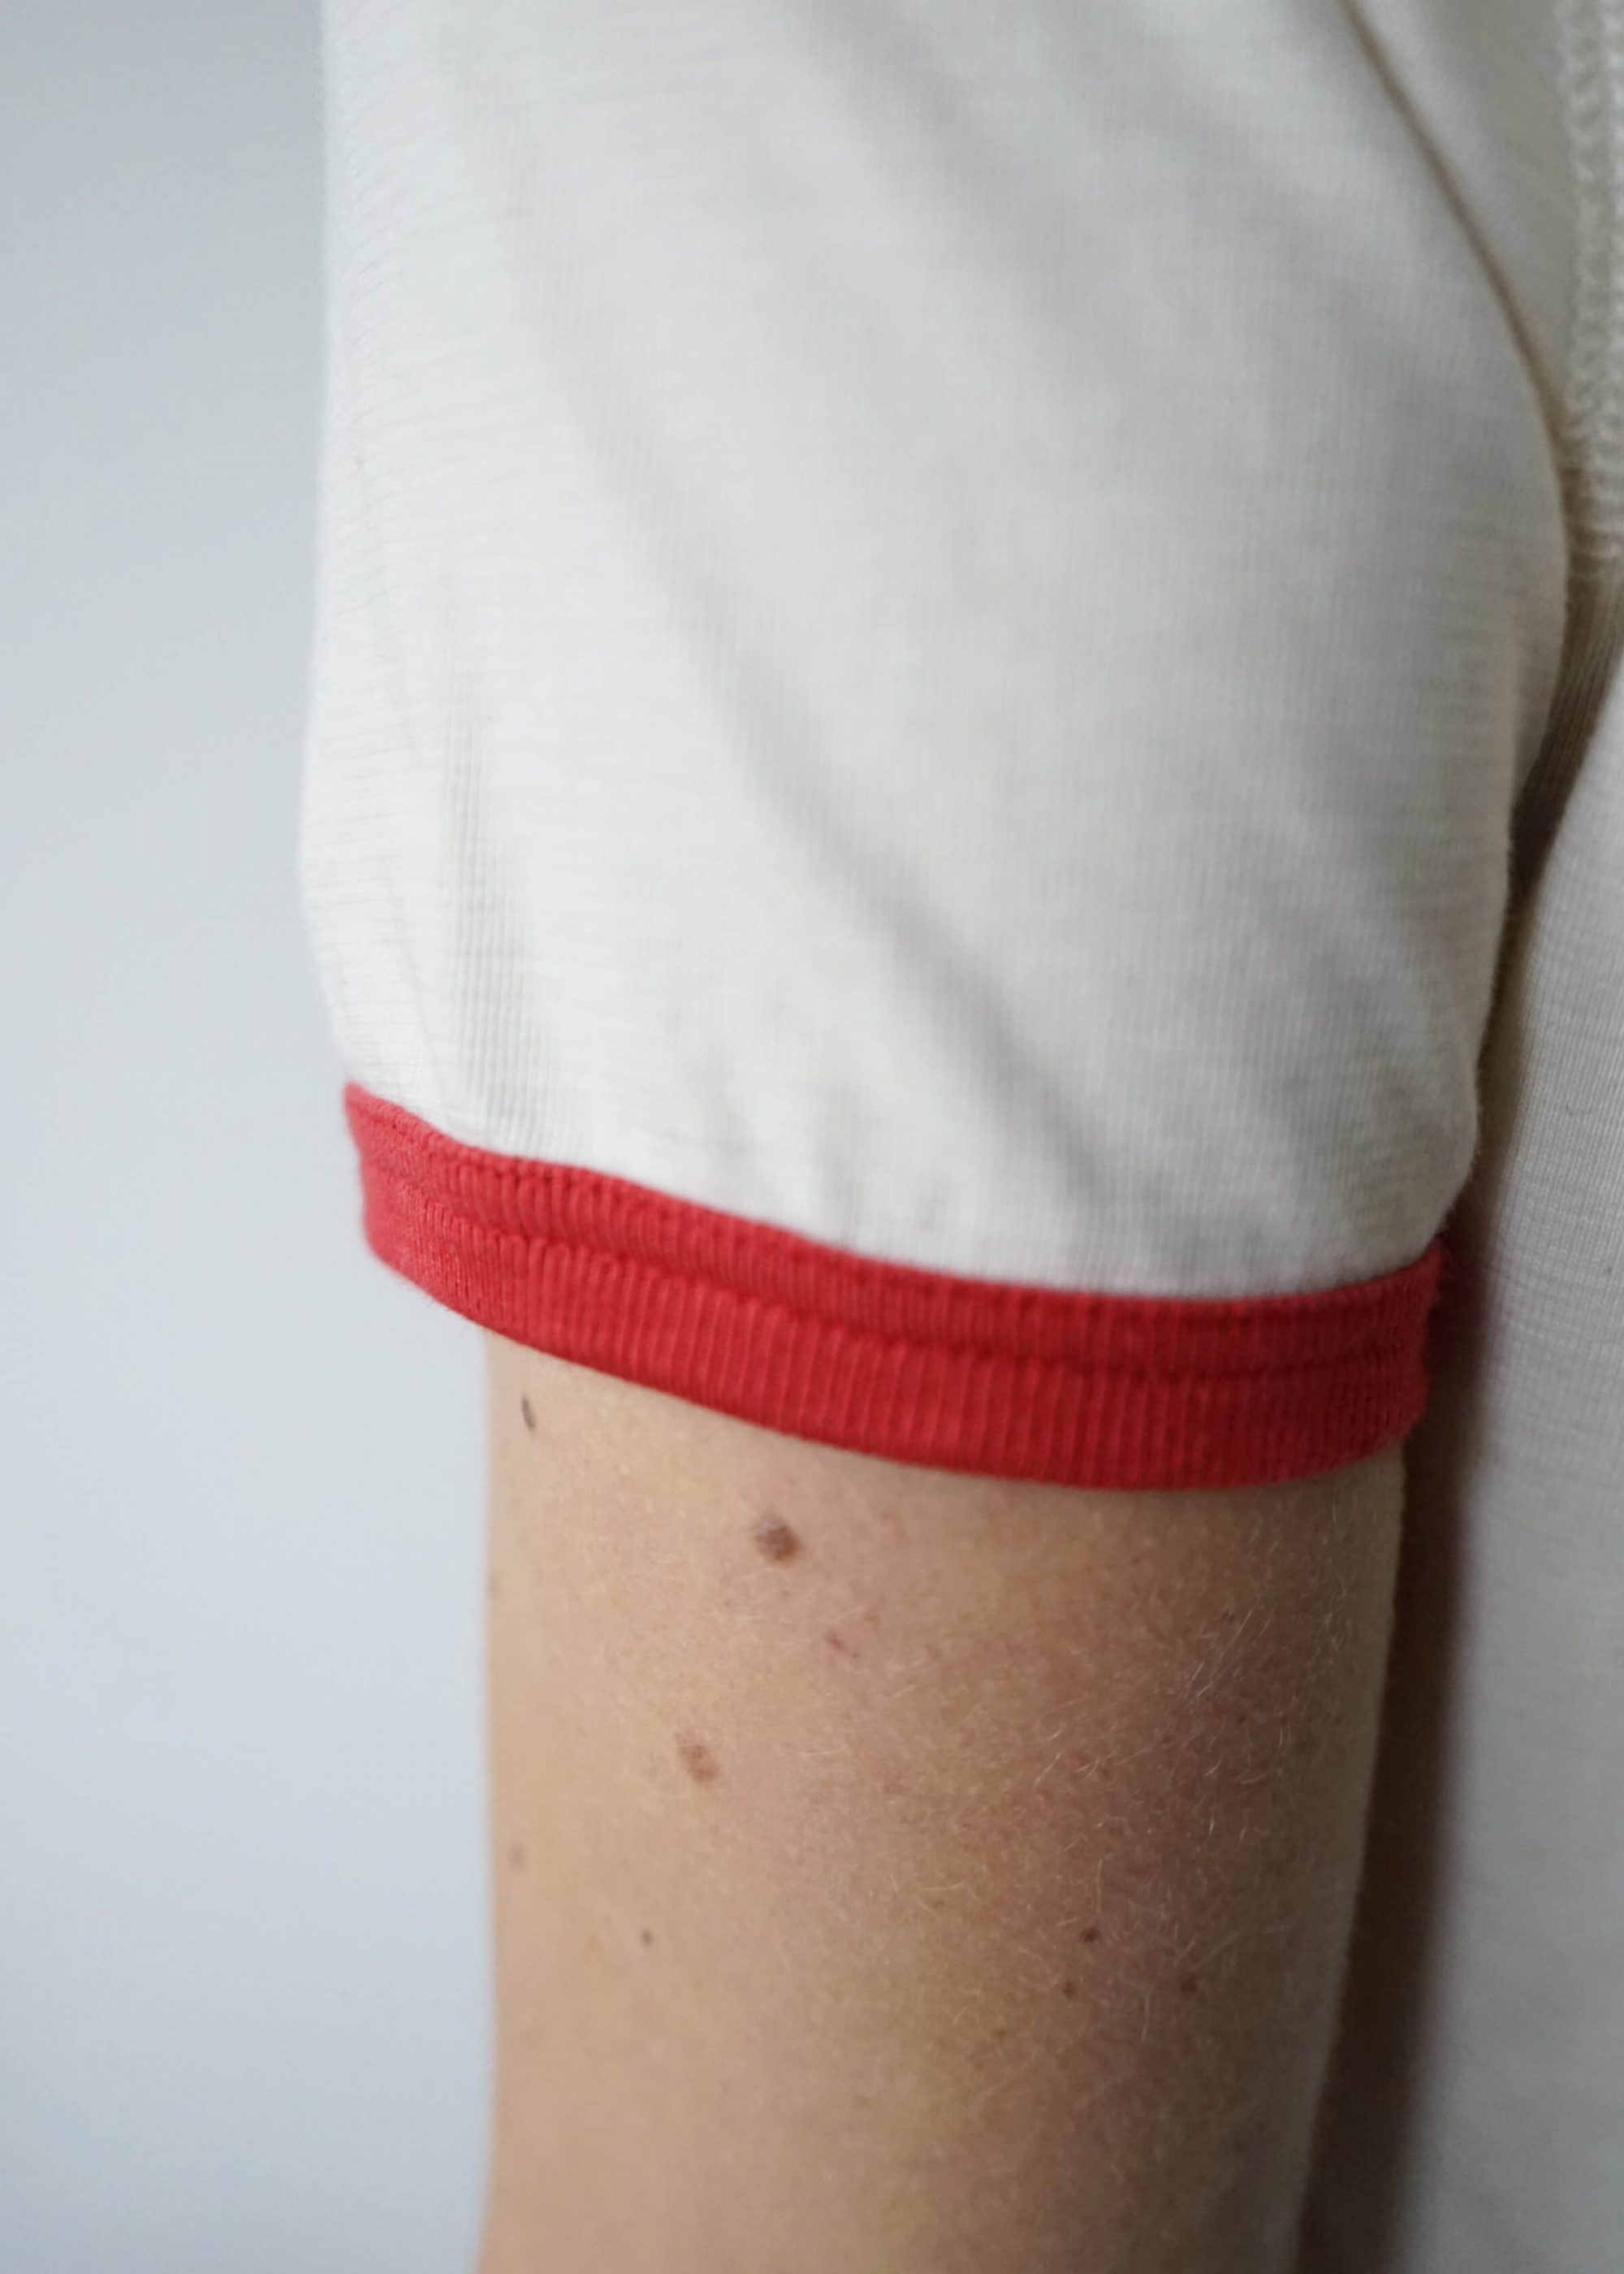 Product image for »Corita« Ecru Red Ringer T-Shirt 100% Organic Cotton